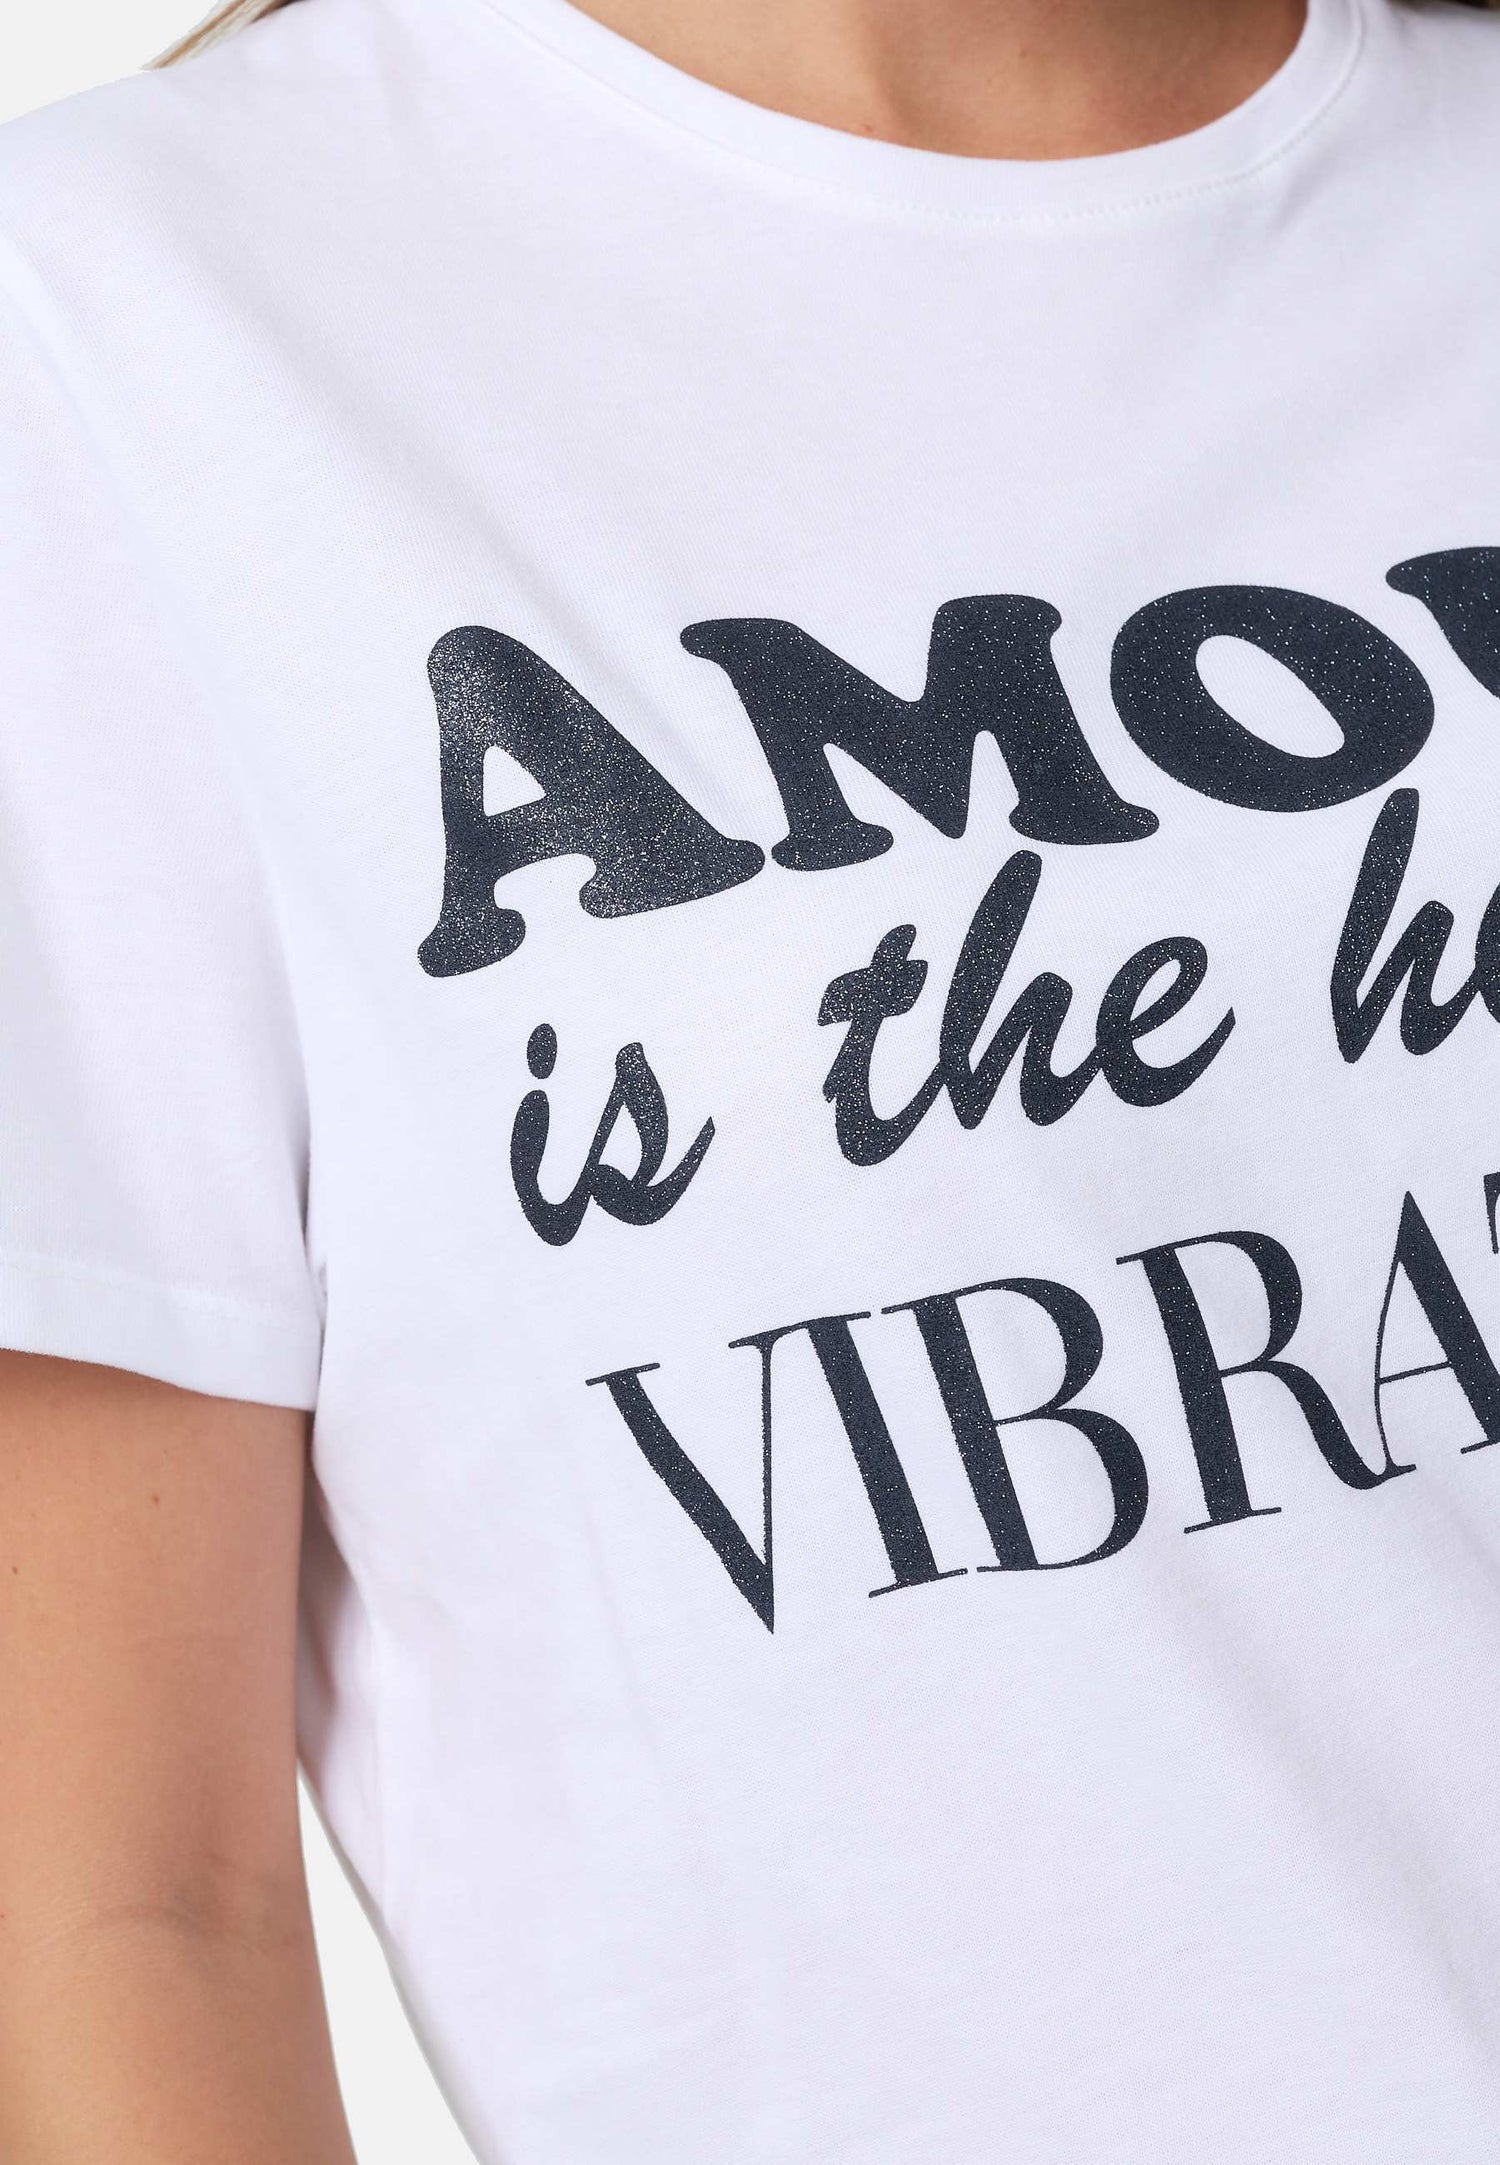 Soft T-Shirt Mit Amour Is The Highest Vibration Glitter Druck